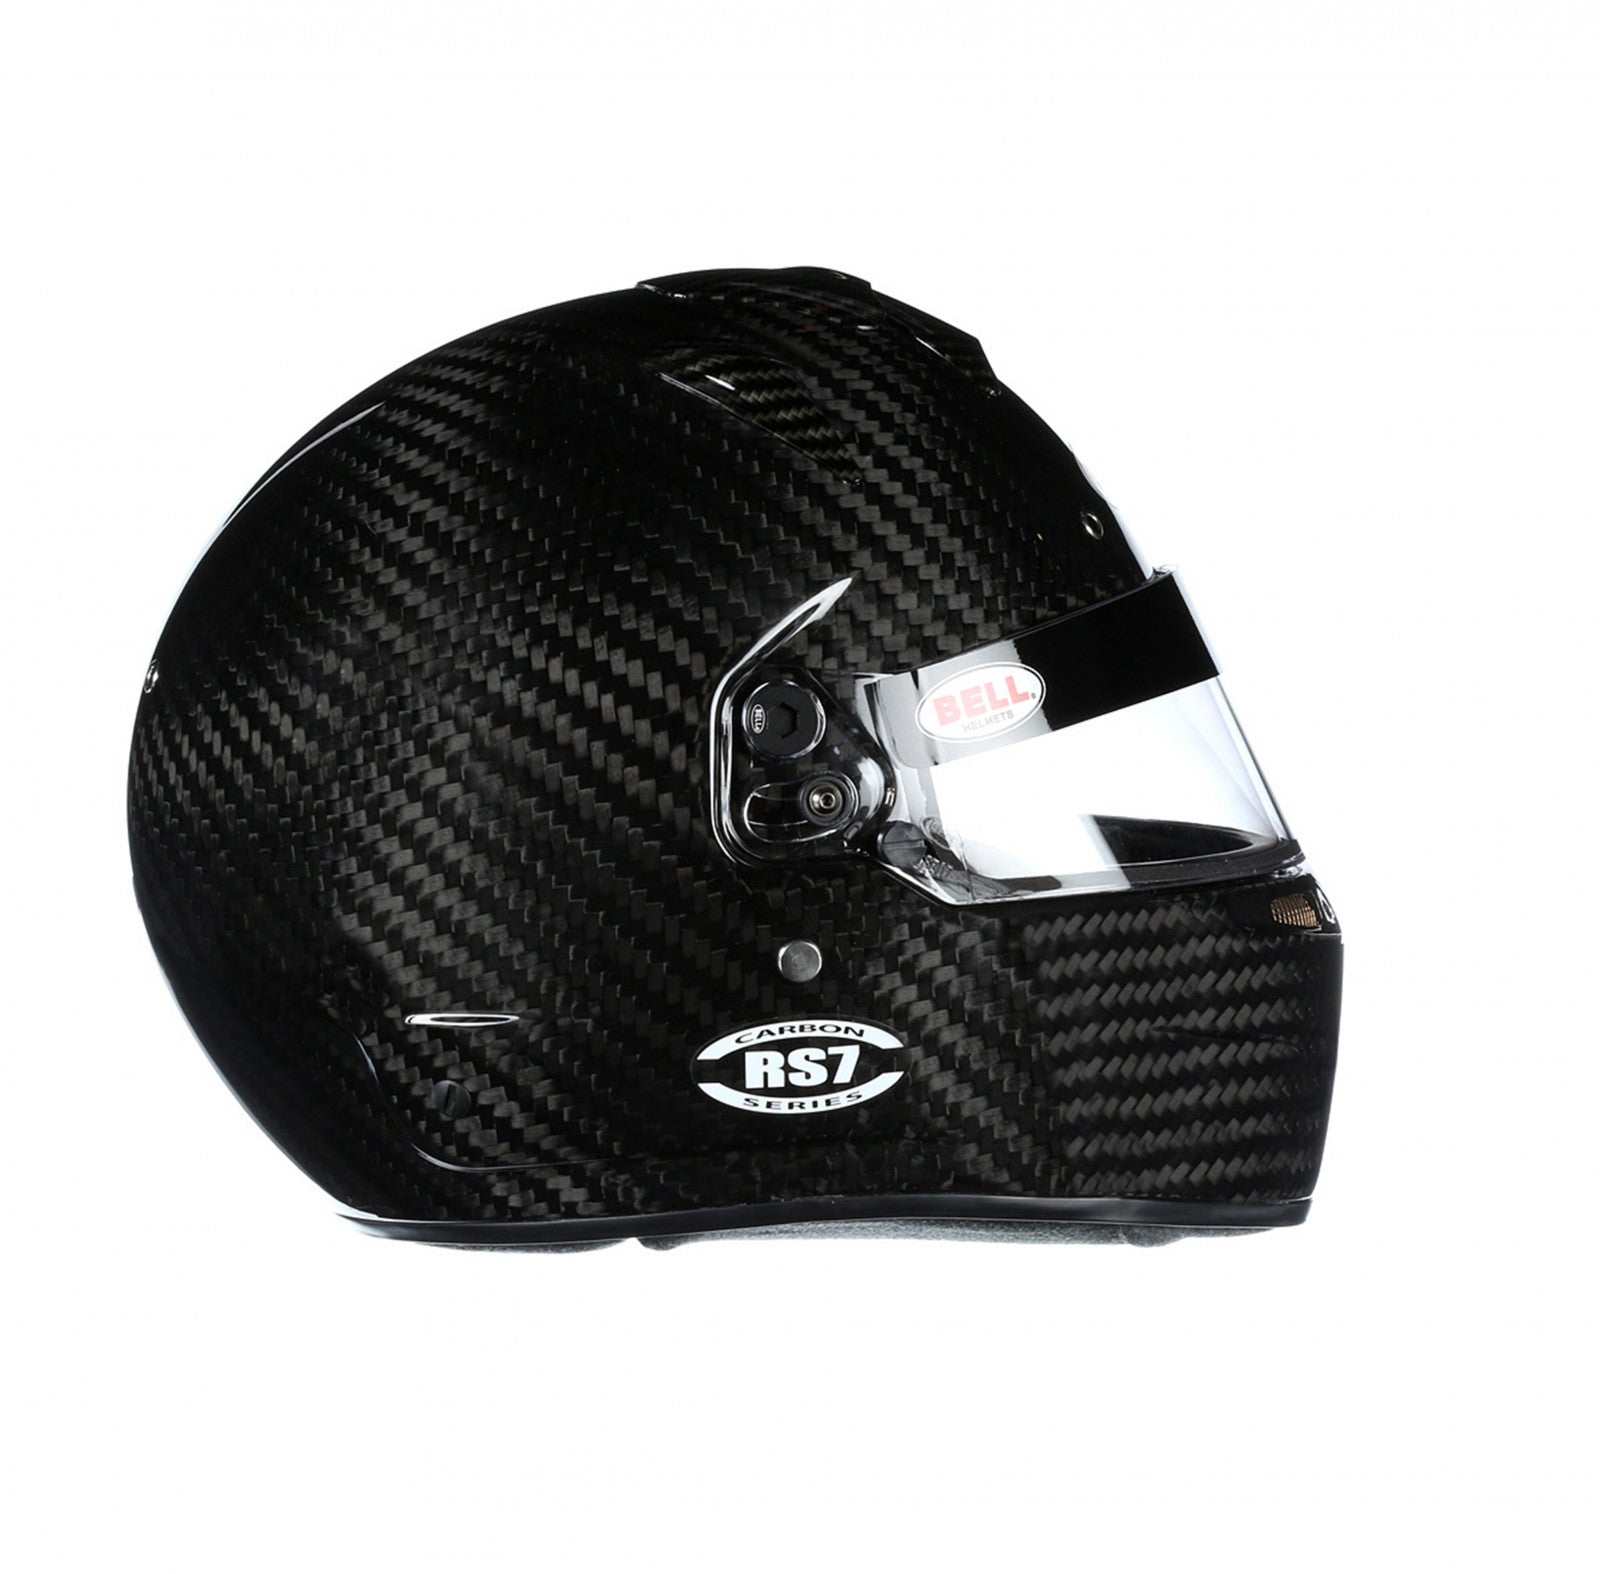 Bell RS7 Carbon Helmet Size 61 cm